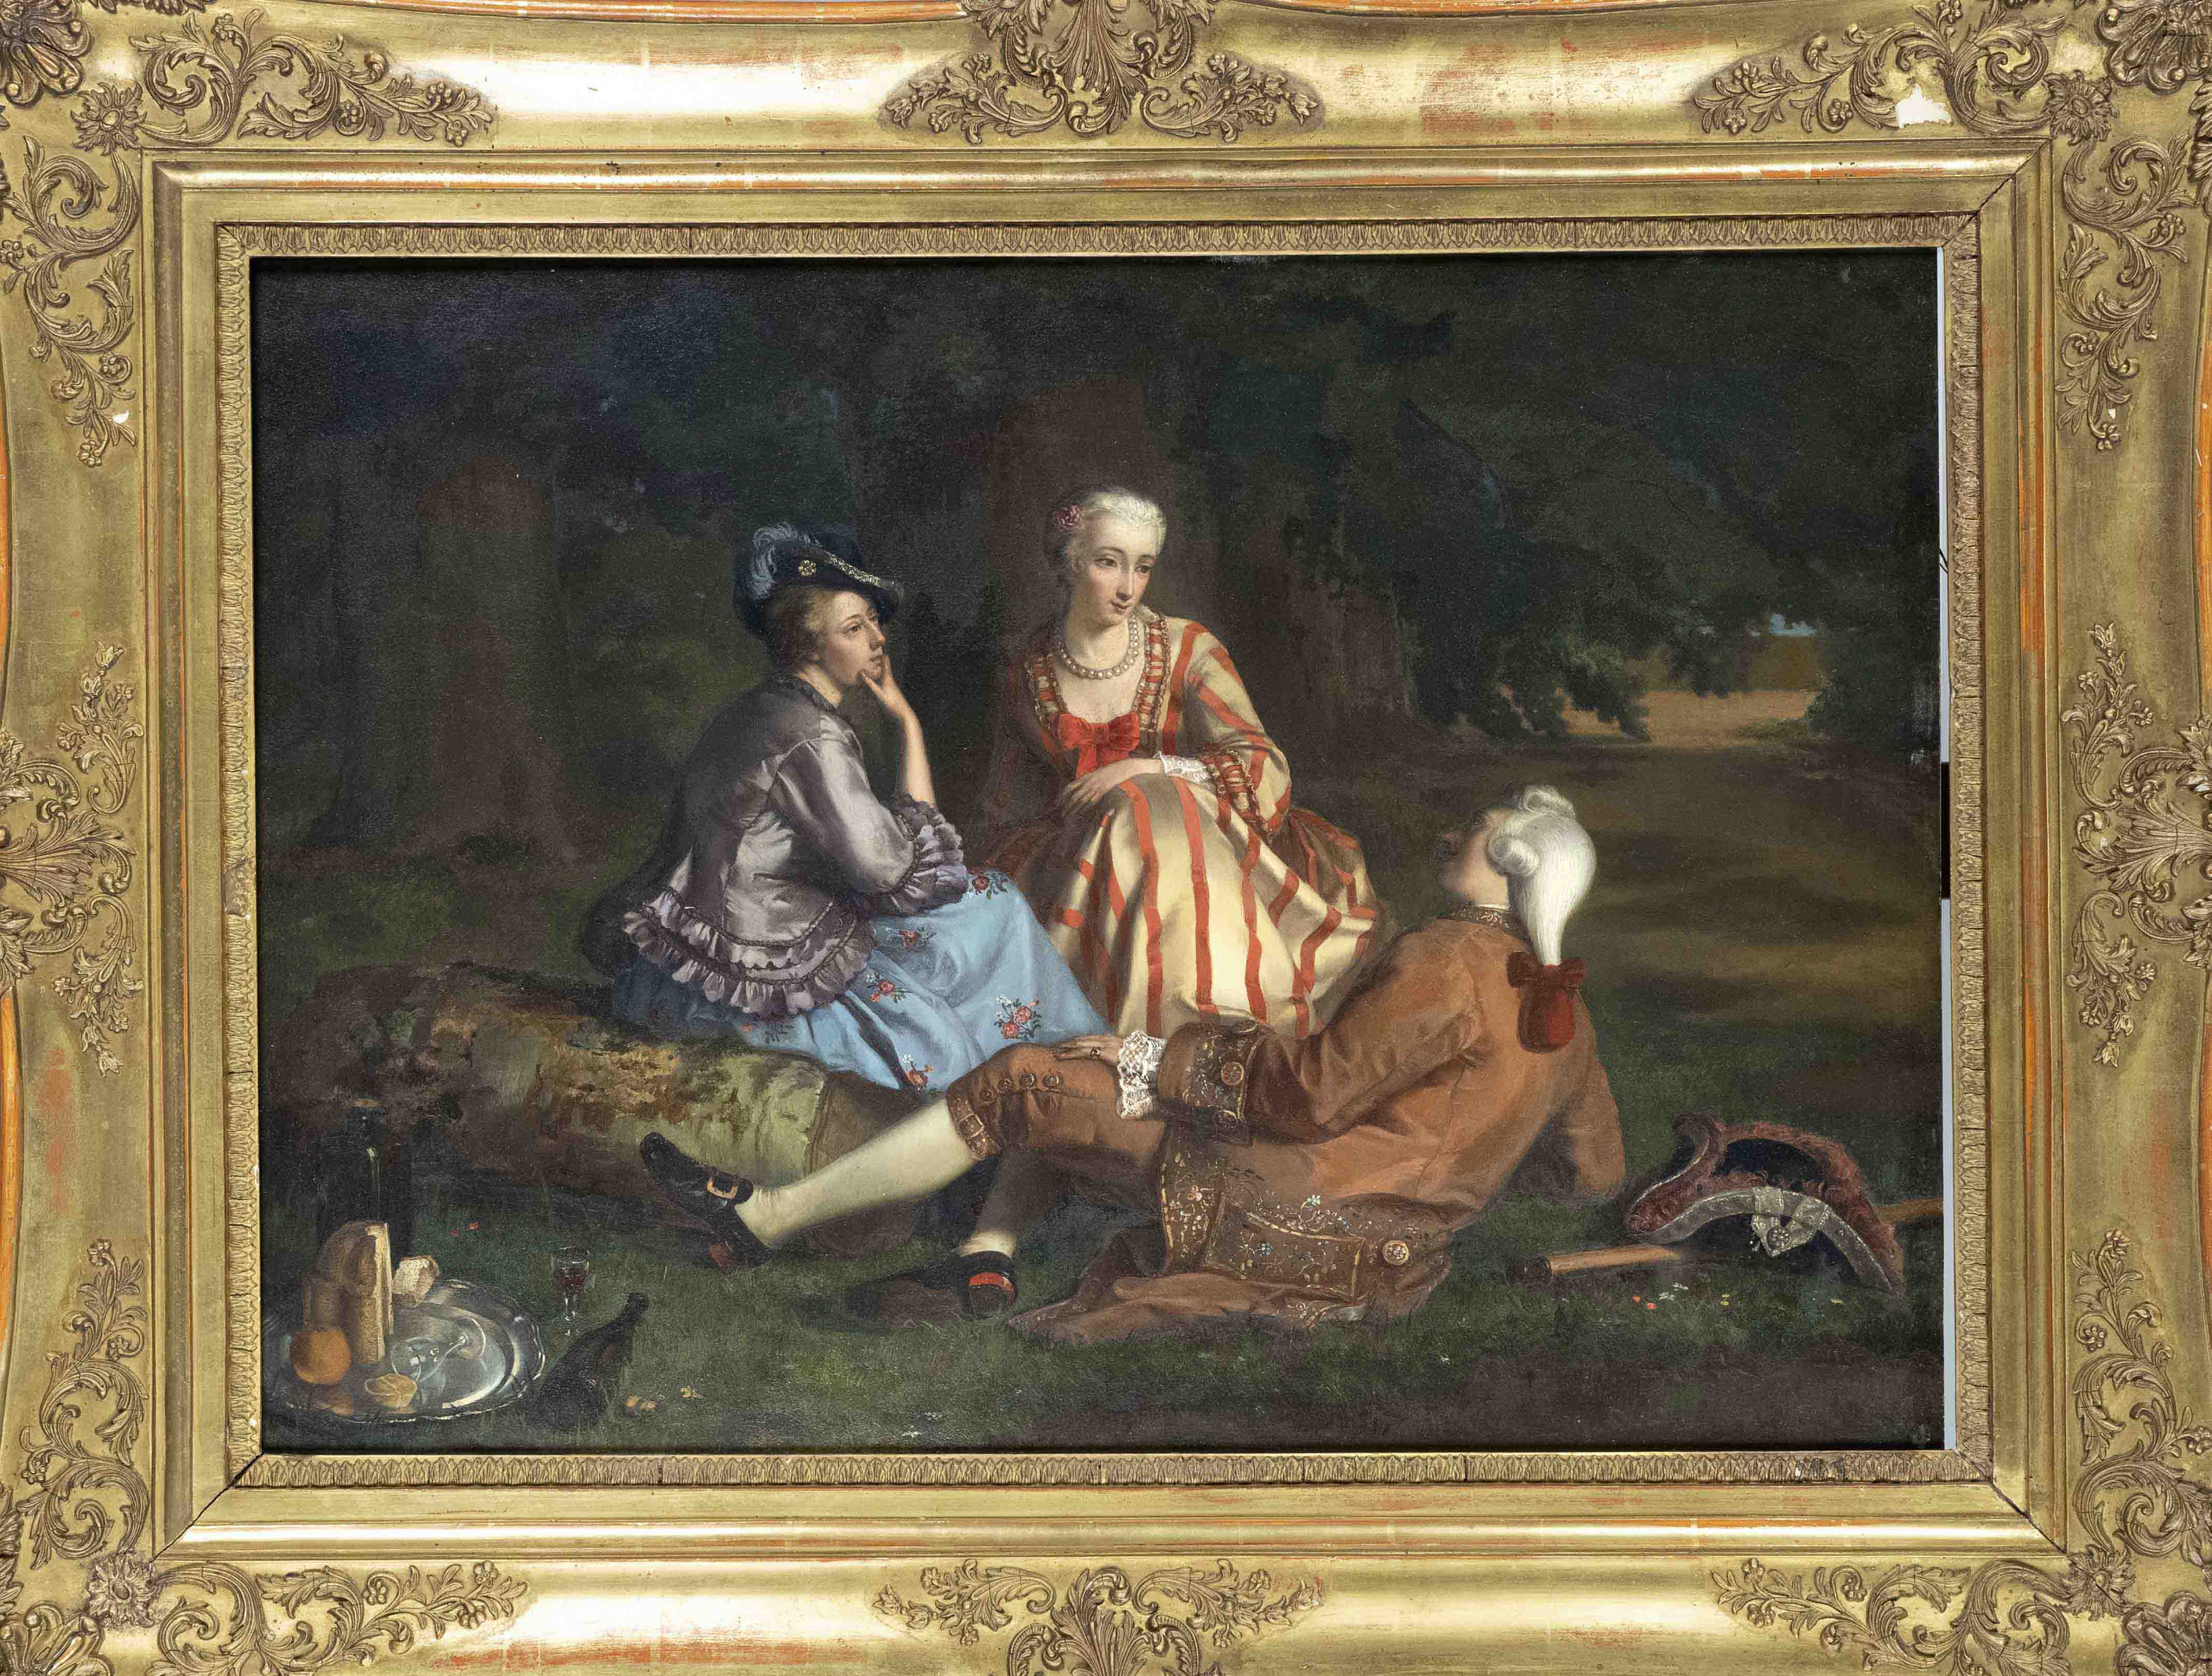 Auguste Paul de Keyser, 19th century painter, gallant rococo society in the park, oil on wood,